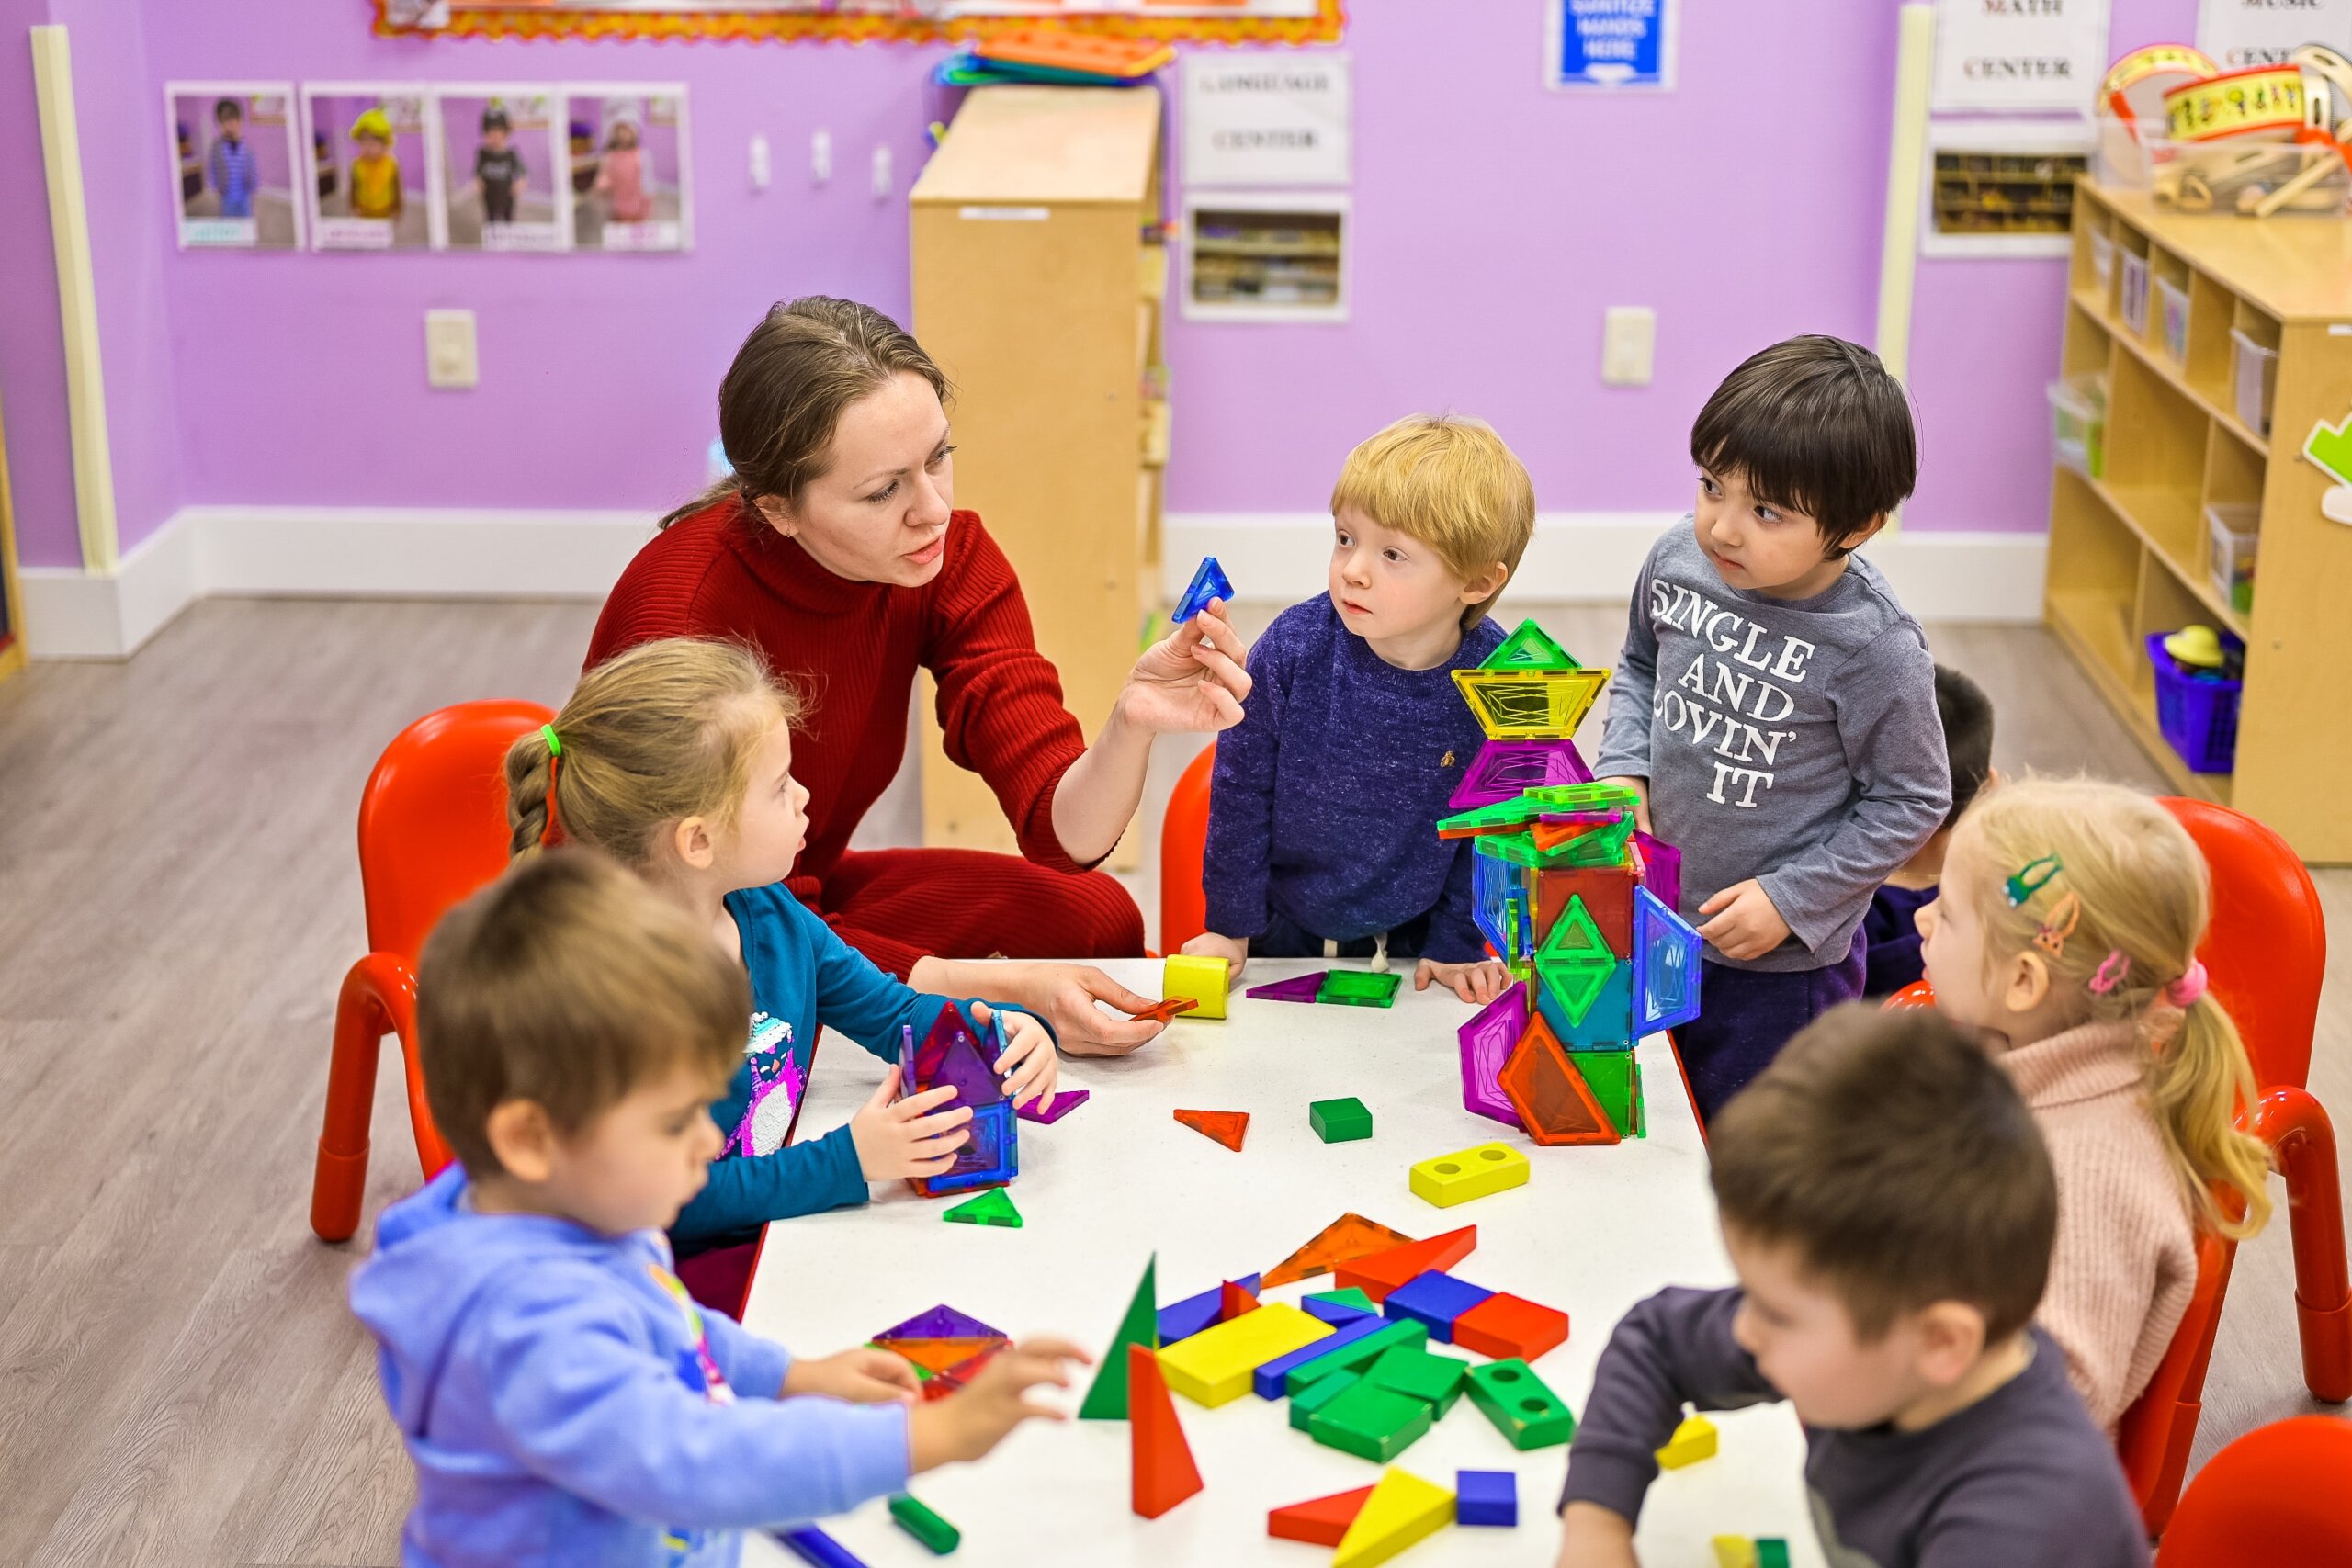 Preschool teacher and children engaging with geometric blocks to build problem-solving skills